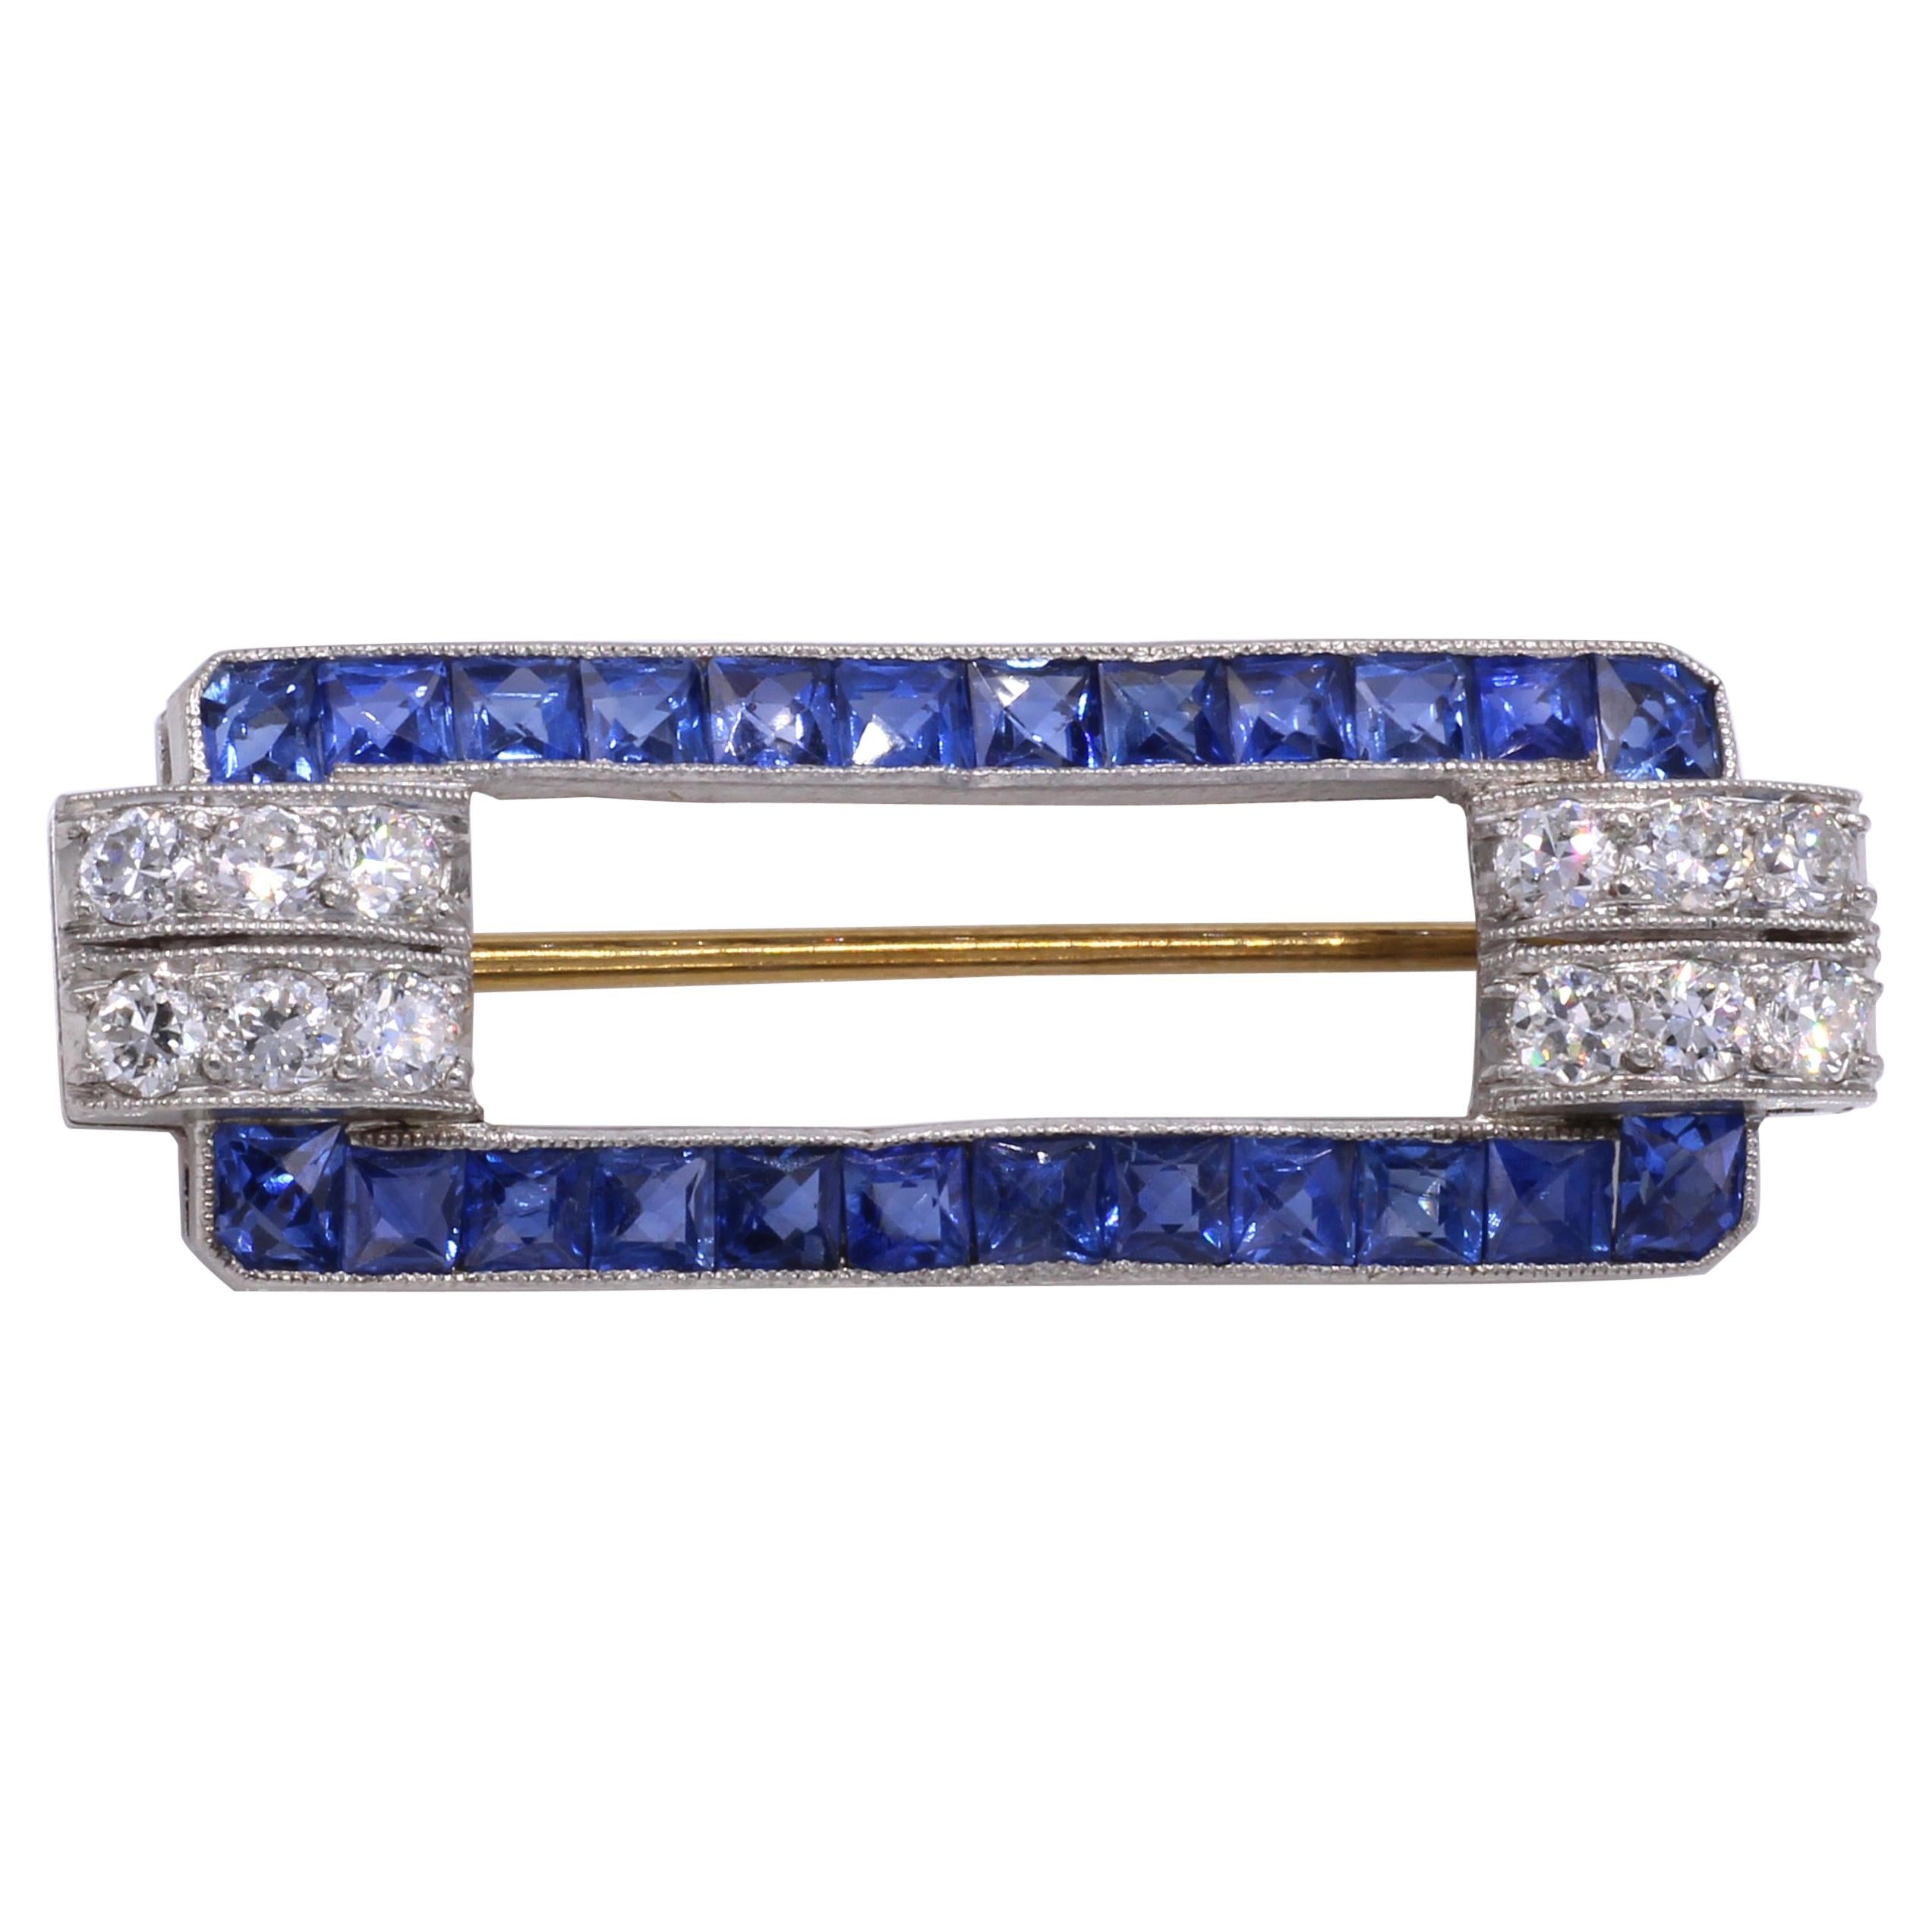 Tiffany & Co. Art Deco Sapphire Diamond Brooch